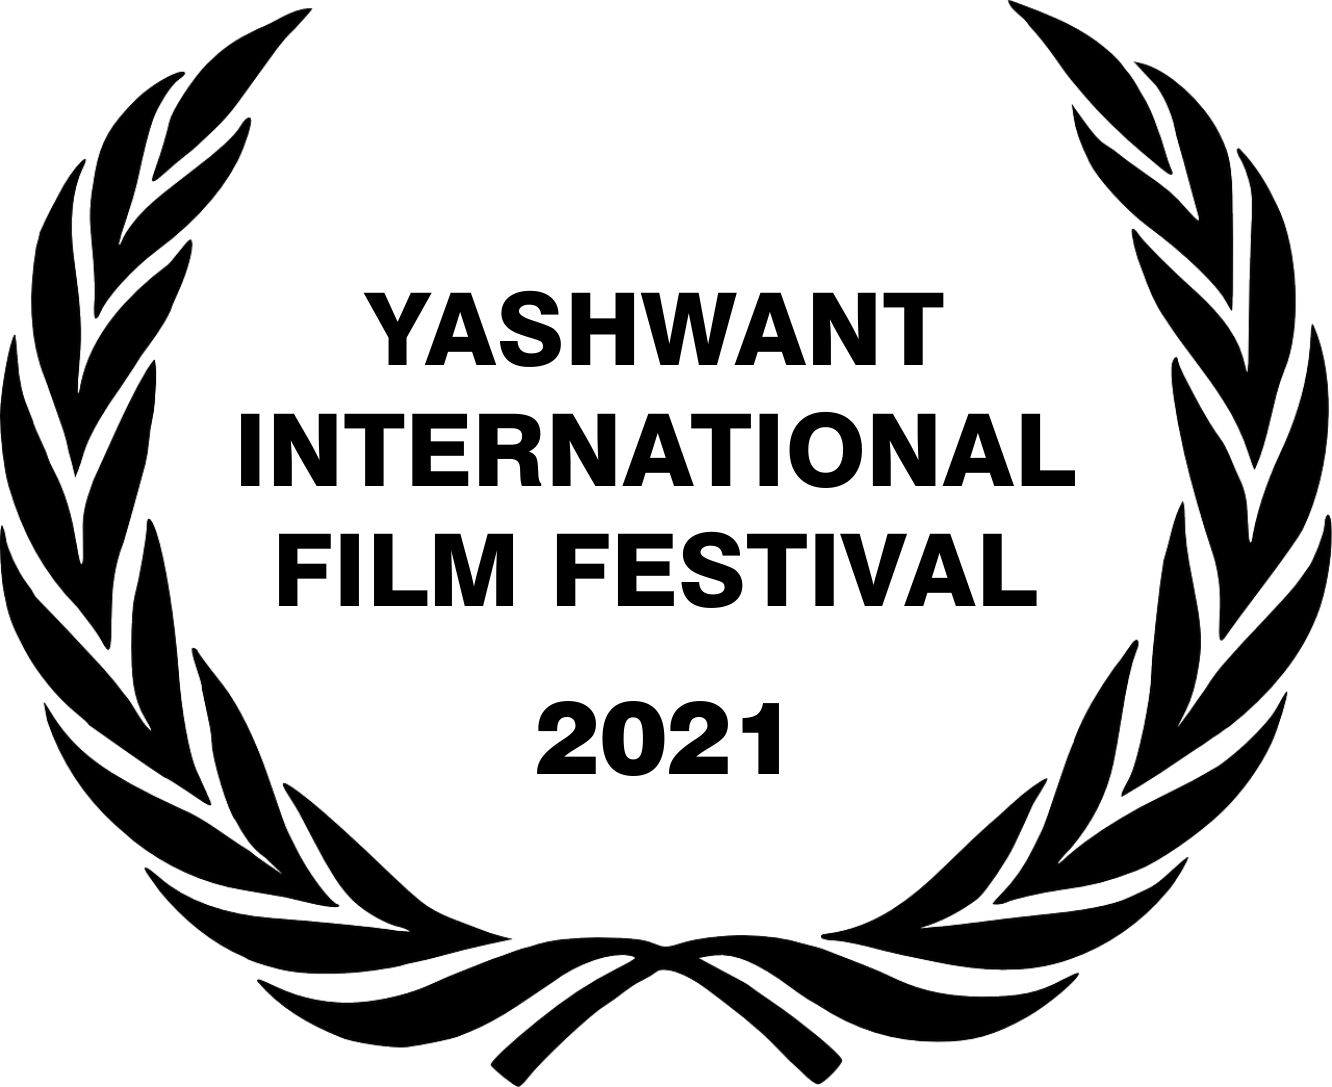 Yashwant International Film Festival